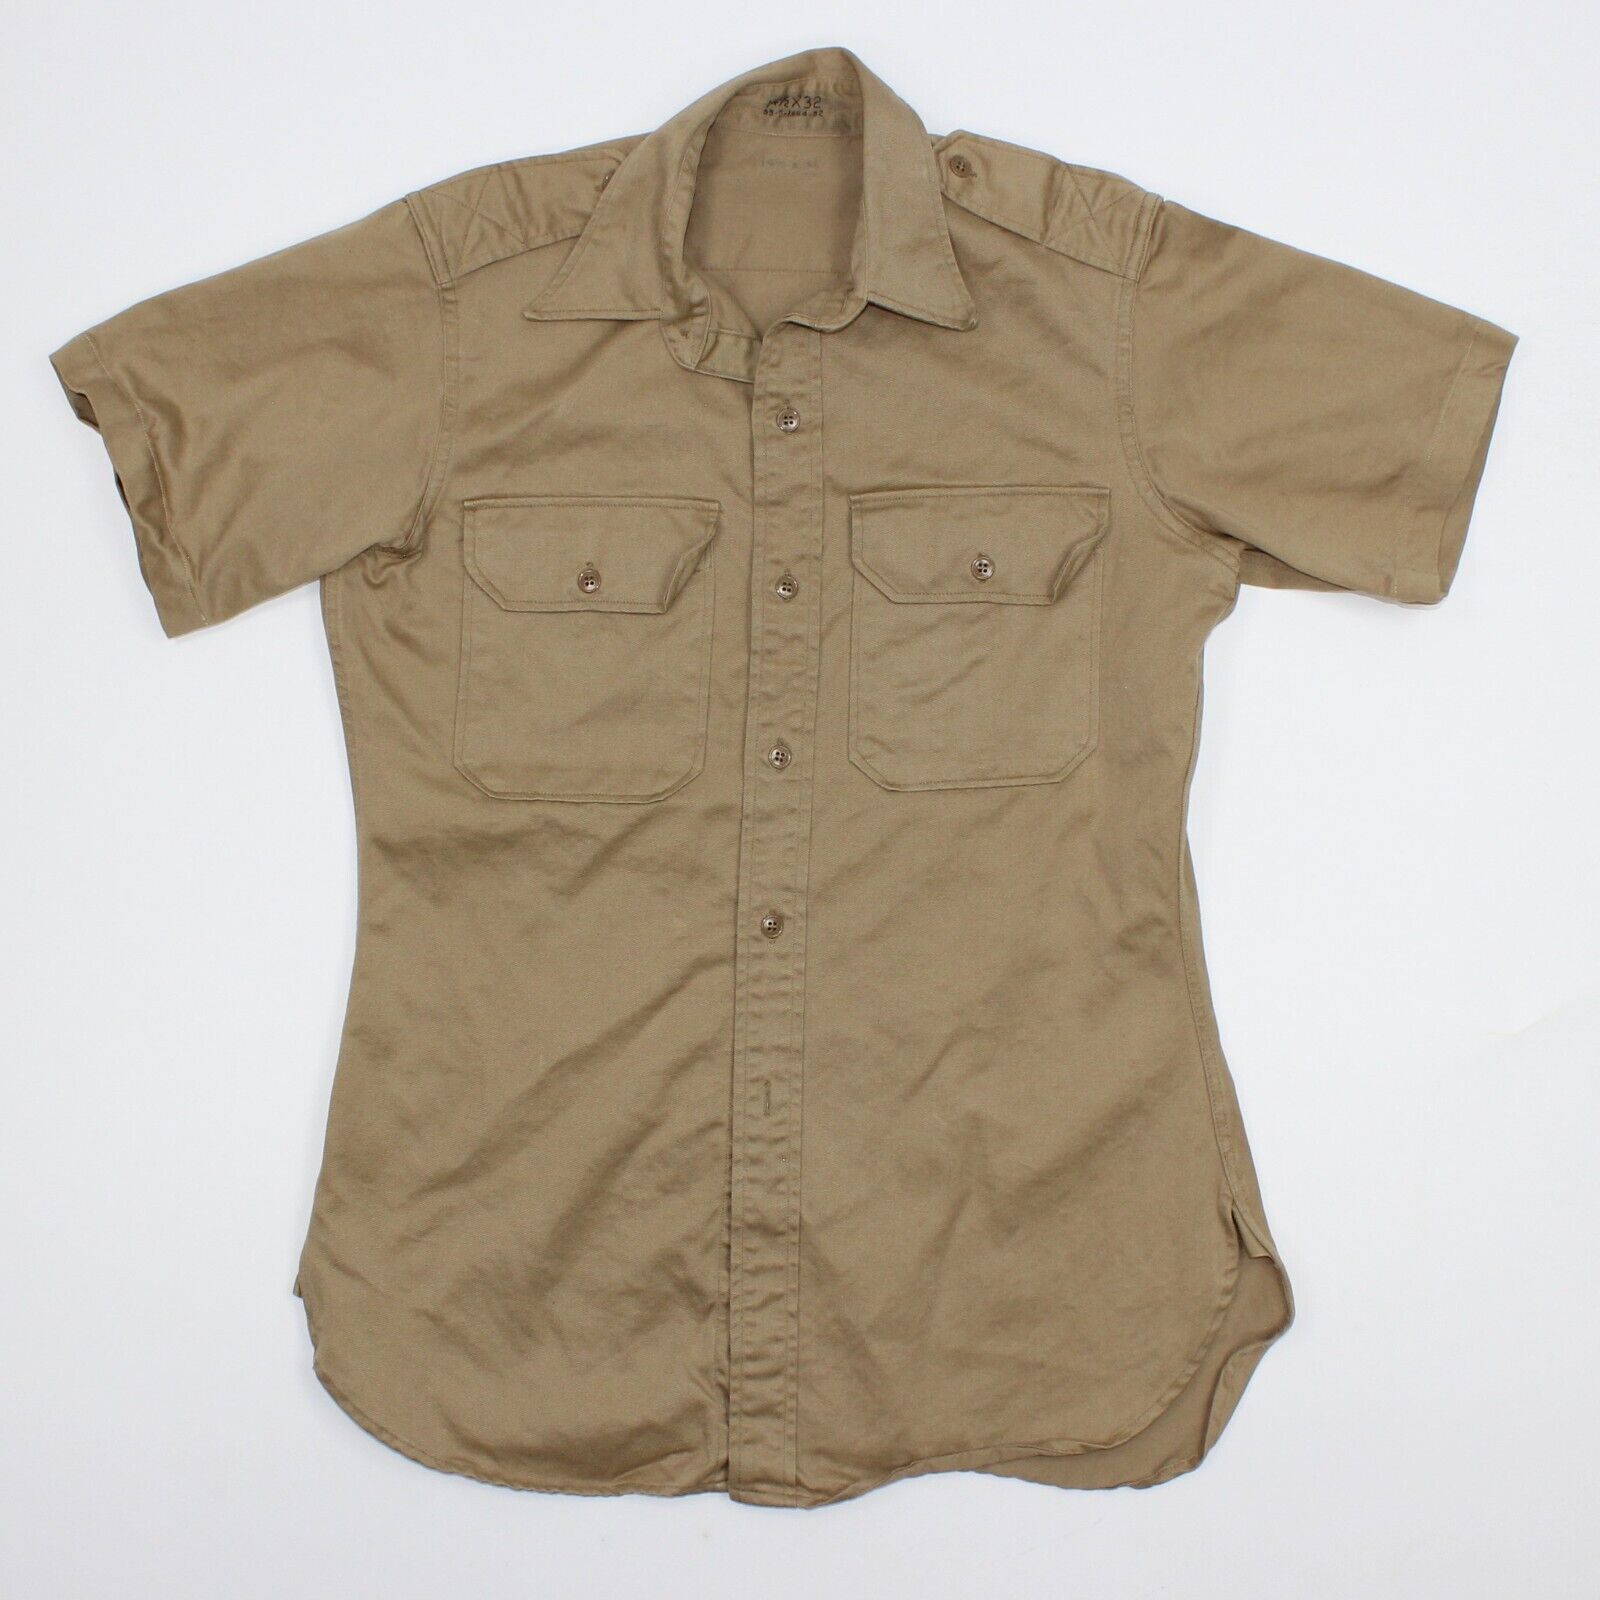 1952 Army Shirt Cotton Khaki -1 Stand Up Collar 8.2 Oz Korean War SIZE 14.5 X 32